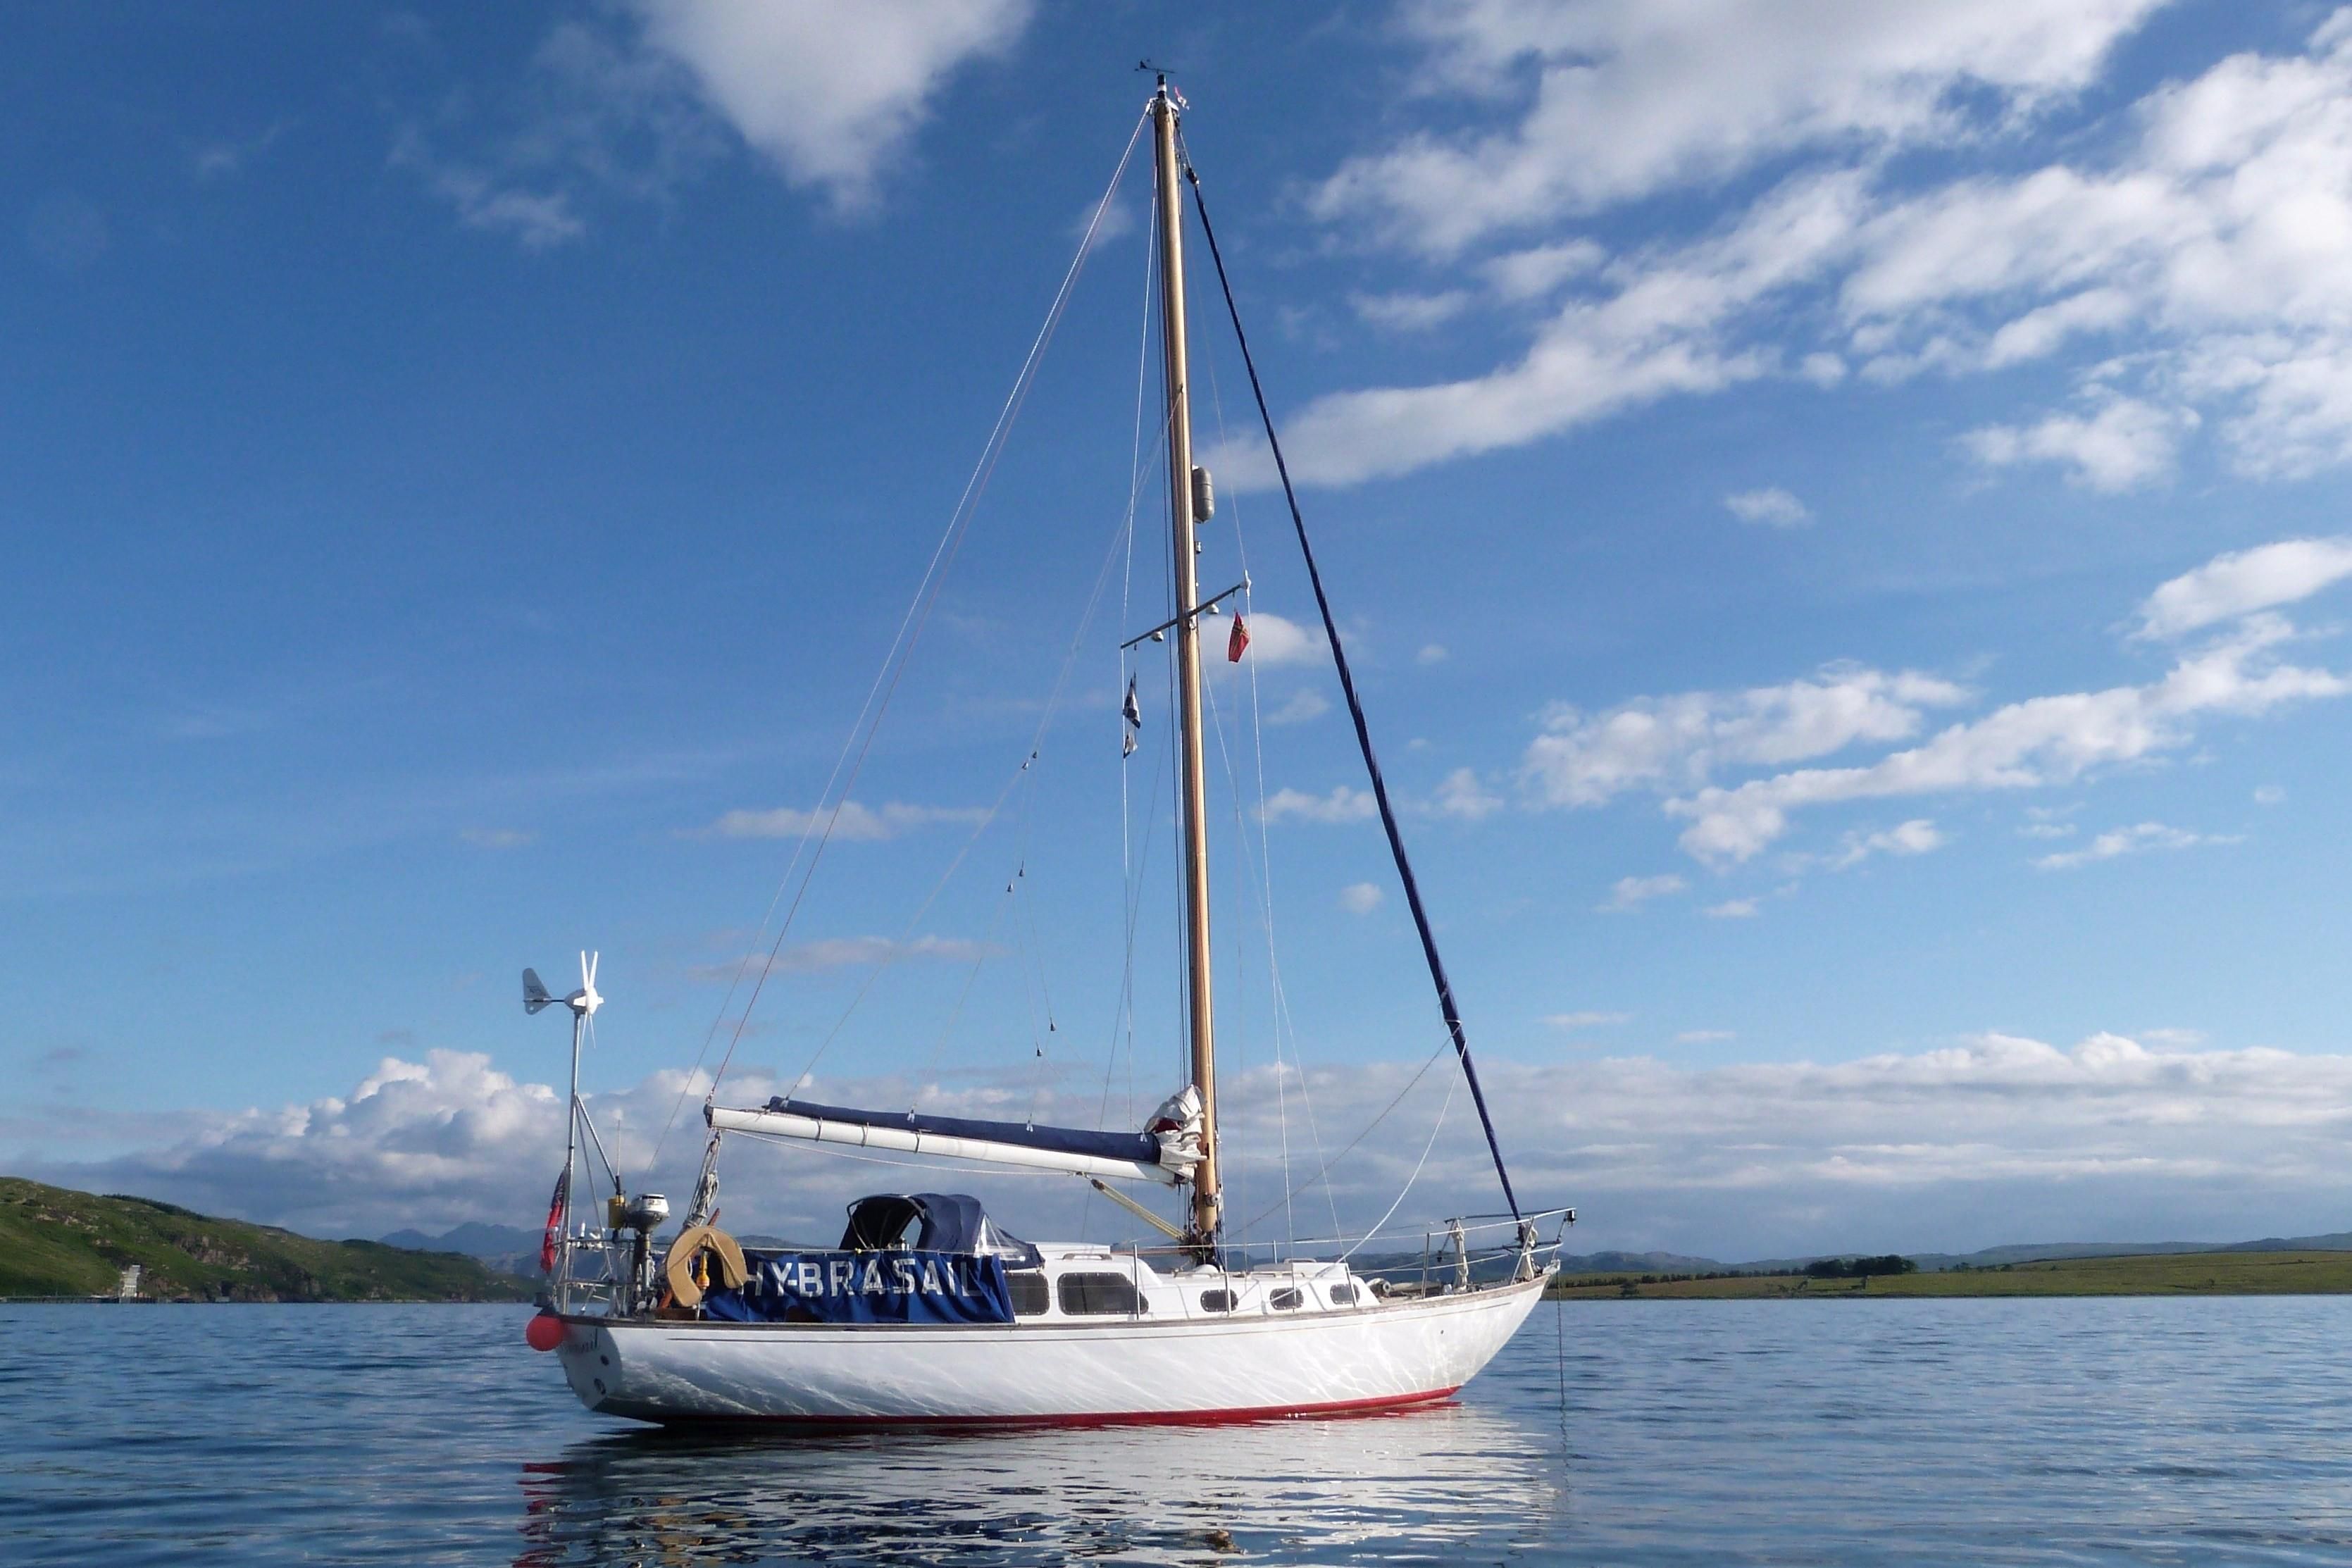 nicholson 32 sailboat